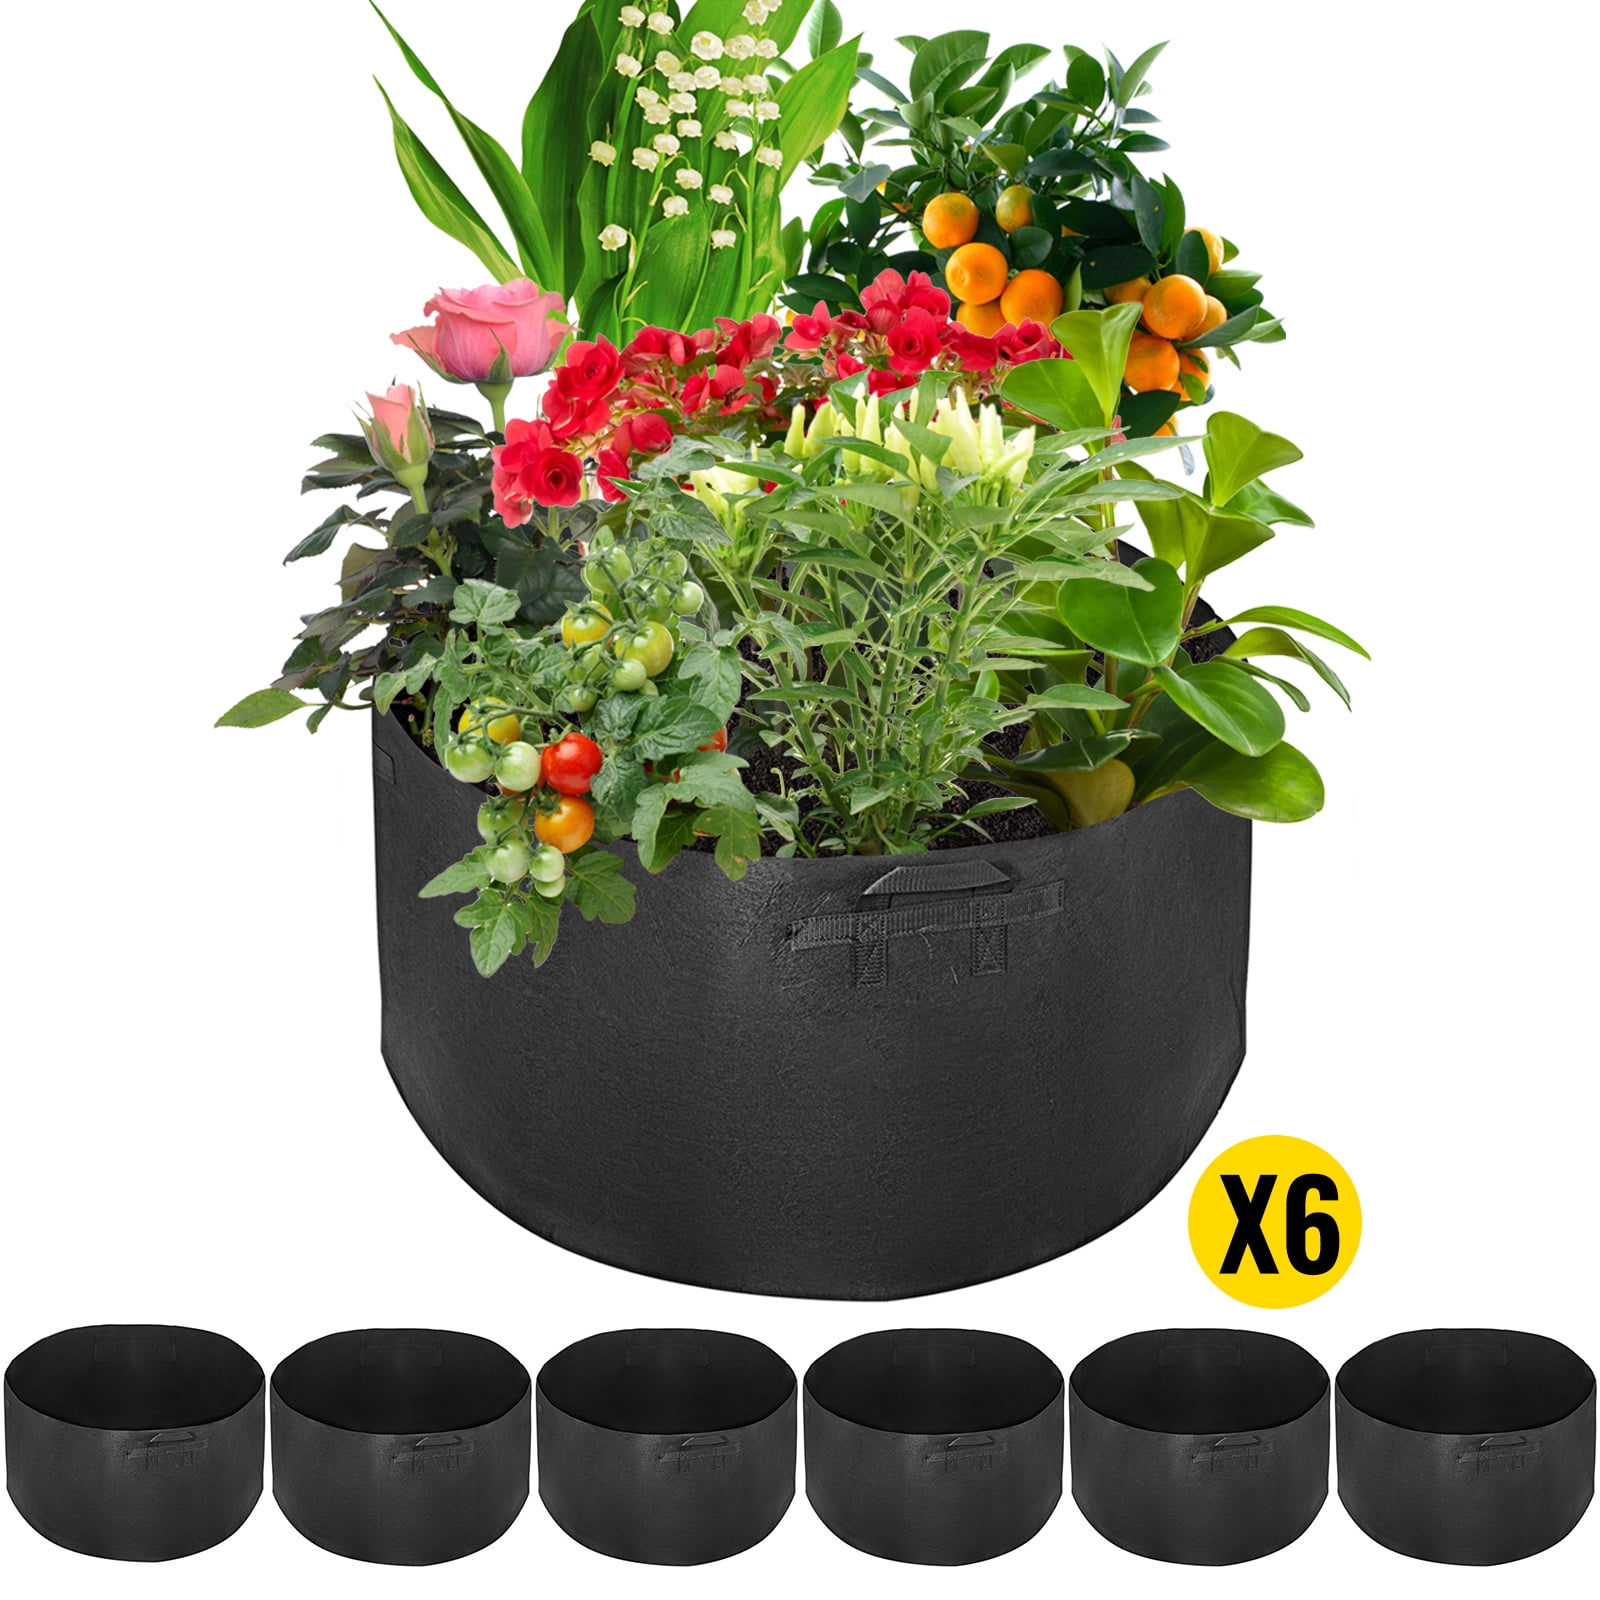 VEVOR 5-Pack 200 Gallon Plant Grow Bag with Handles Aeration Fabric Pots Washable Reusable